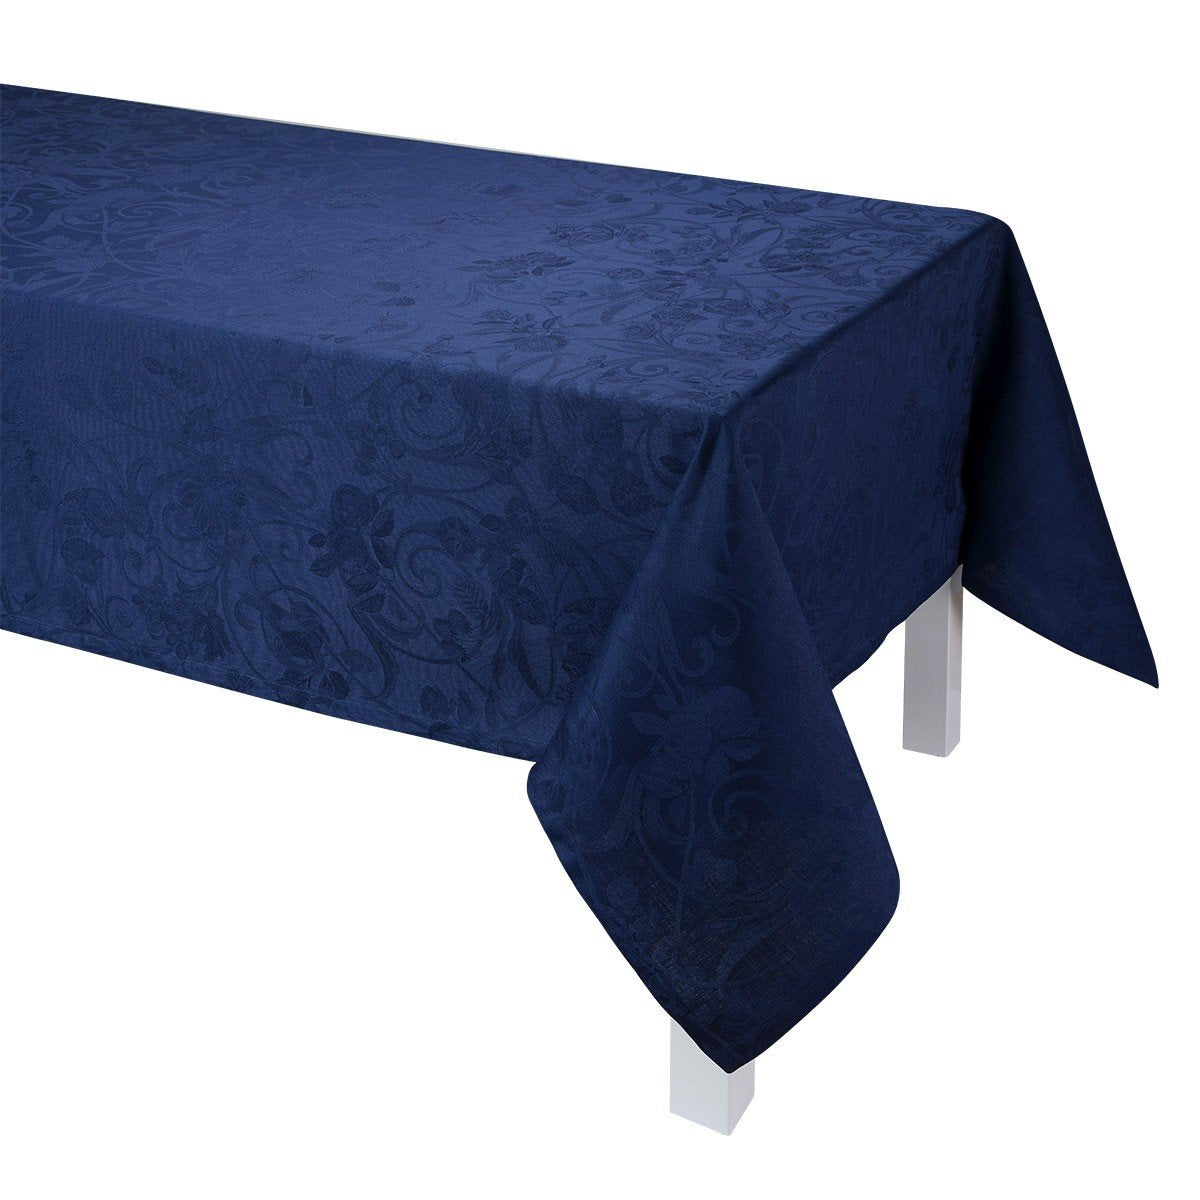 Le Jacquard Français Table Linen Tivoli in Sapphire Navy Blue Fig Linens Tablecloth